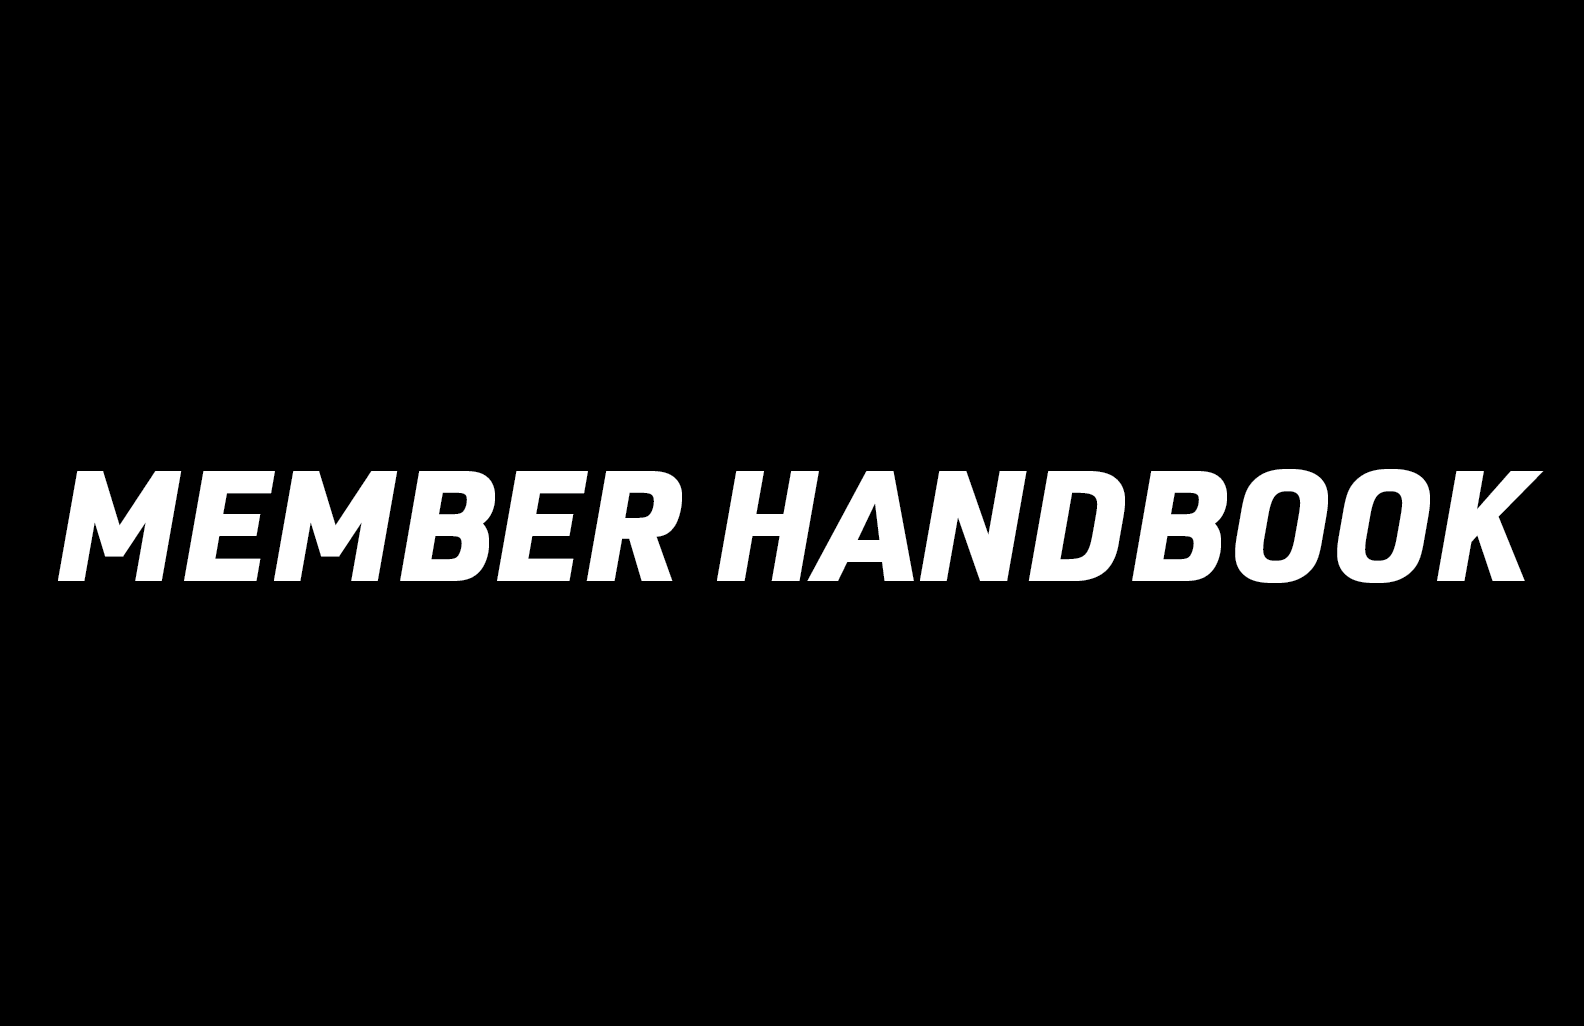 Memberhandbook-01.png